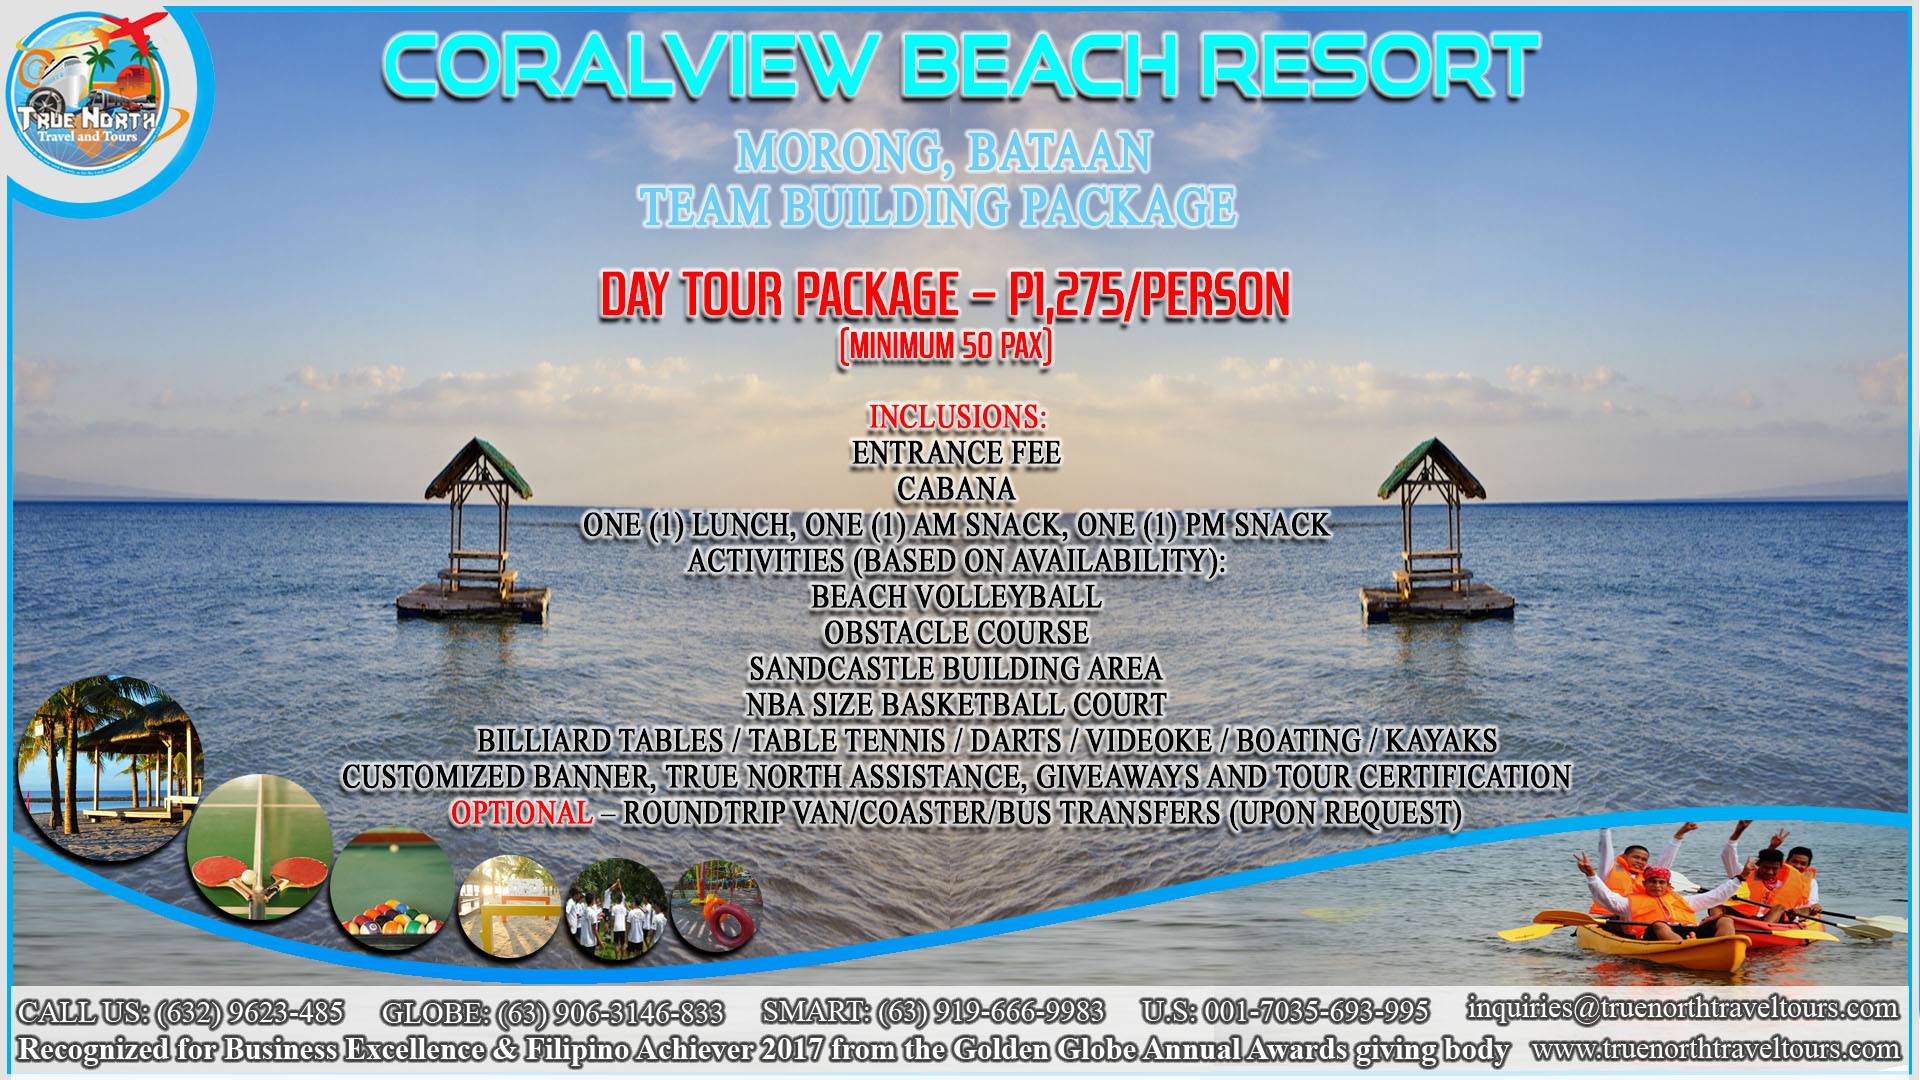 Coralview Beach Resort - TRUE NORTH TRAVEL AND TOURS